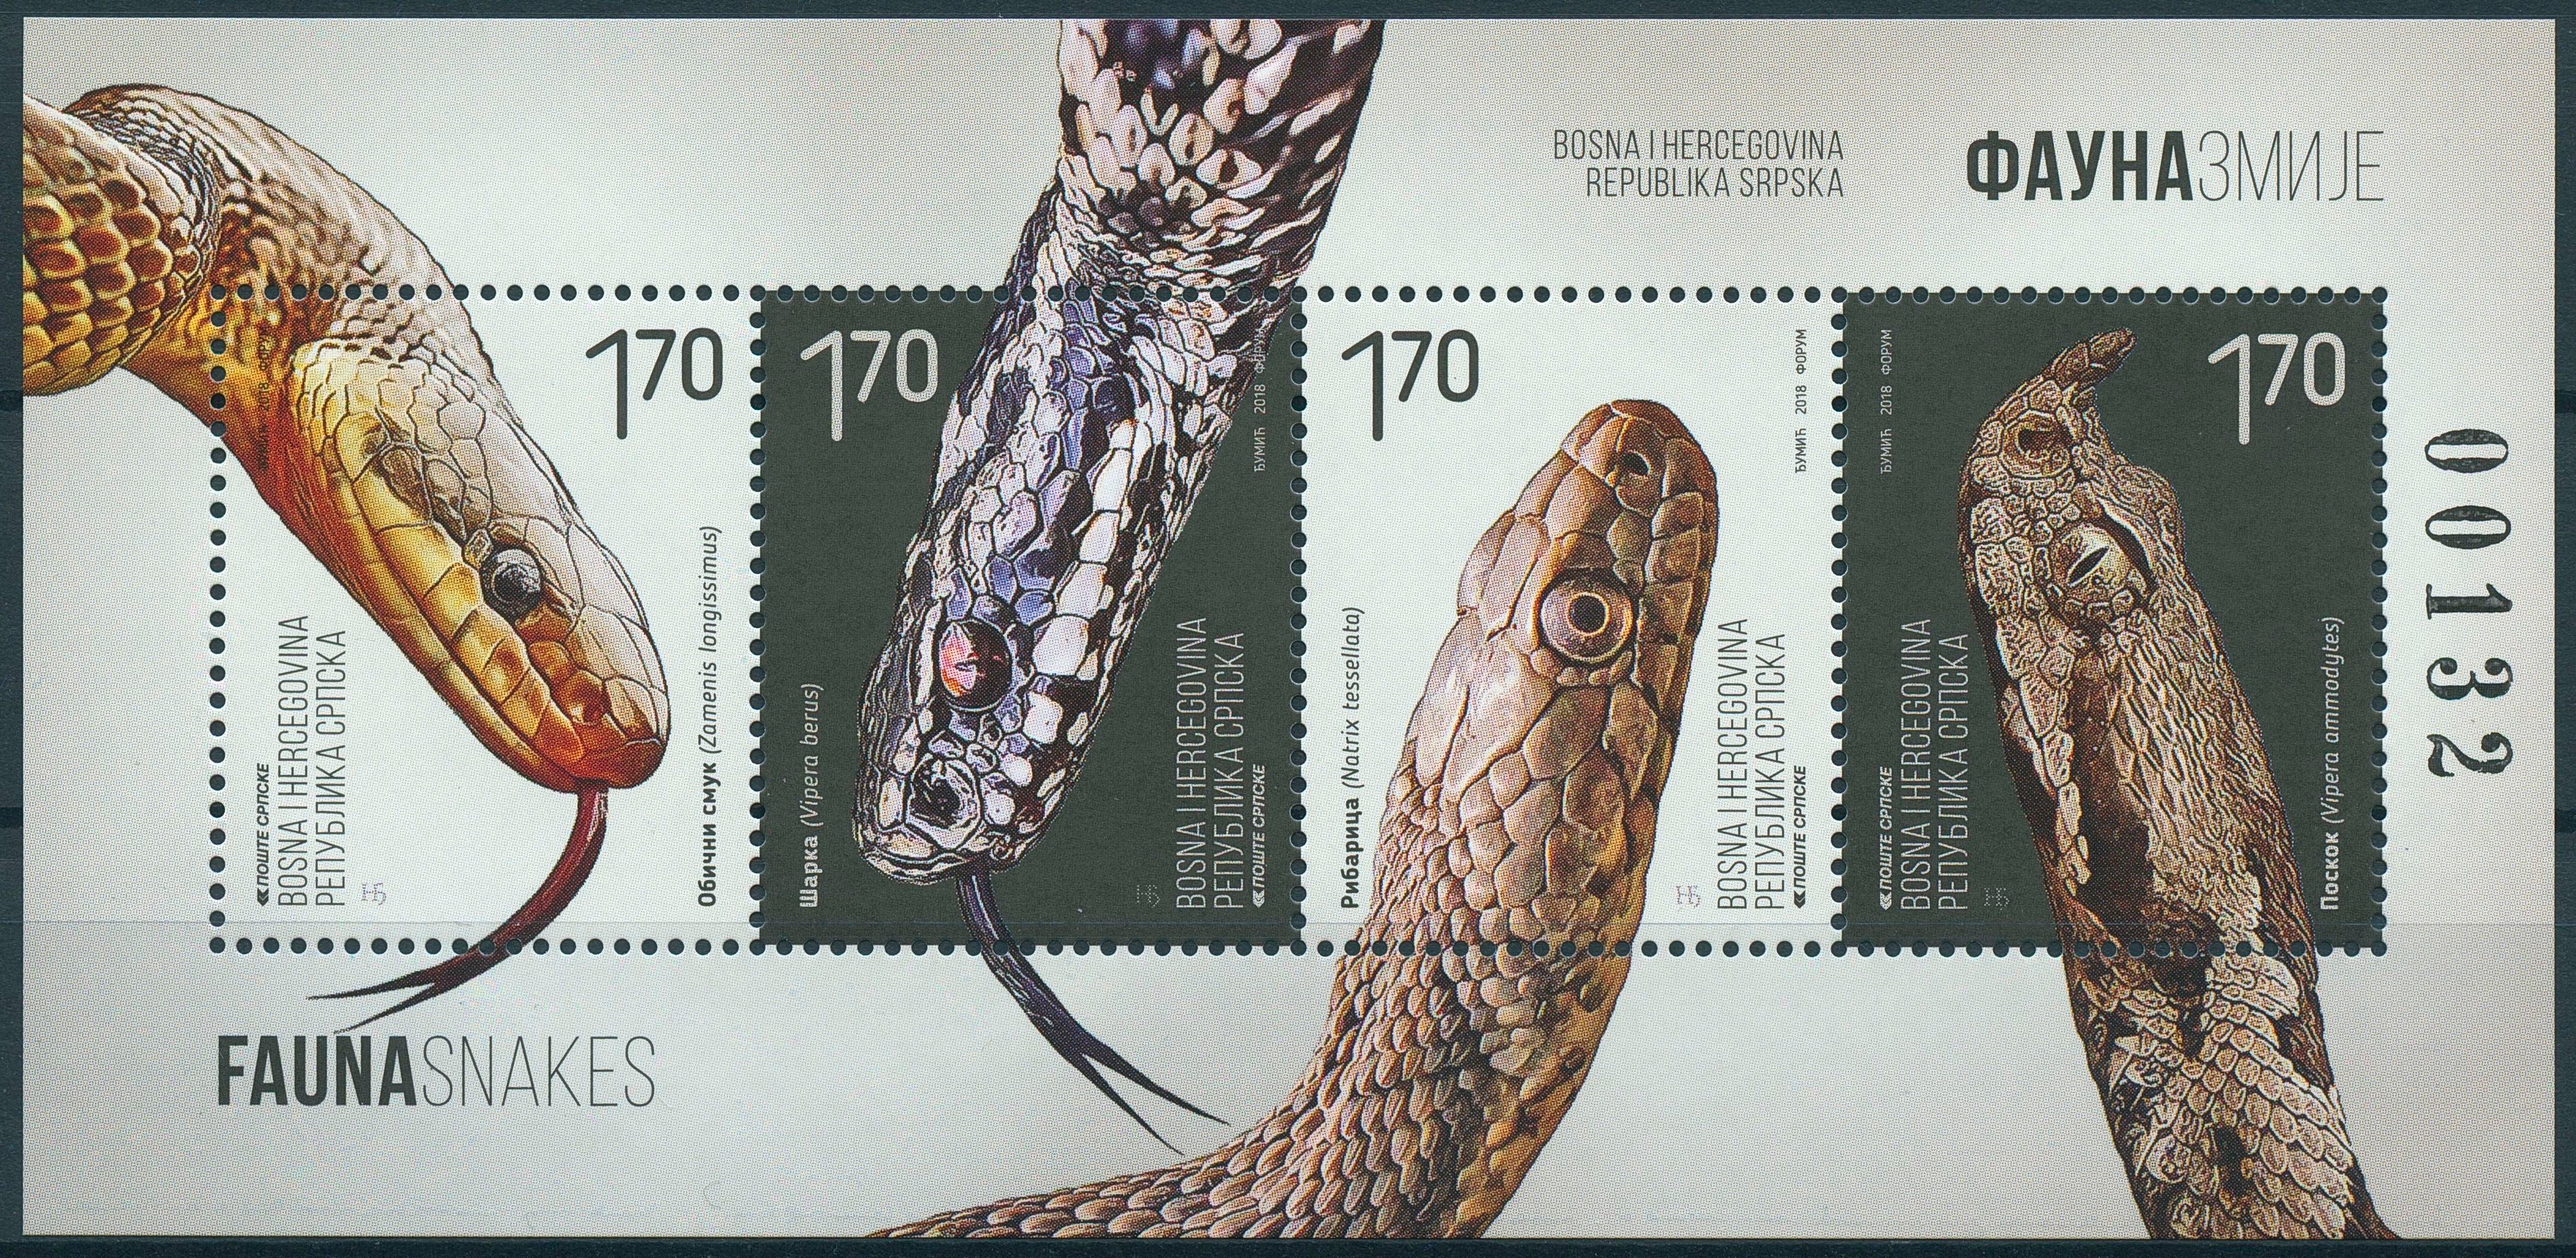 Bosnia & Herzegovina 2018 MNH Fauna Snakes 4v M/S Reptiles Stamps